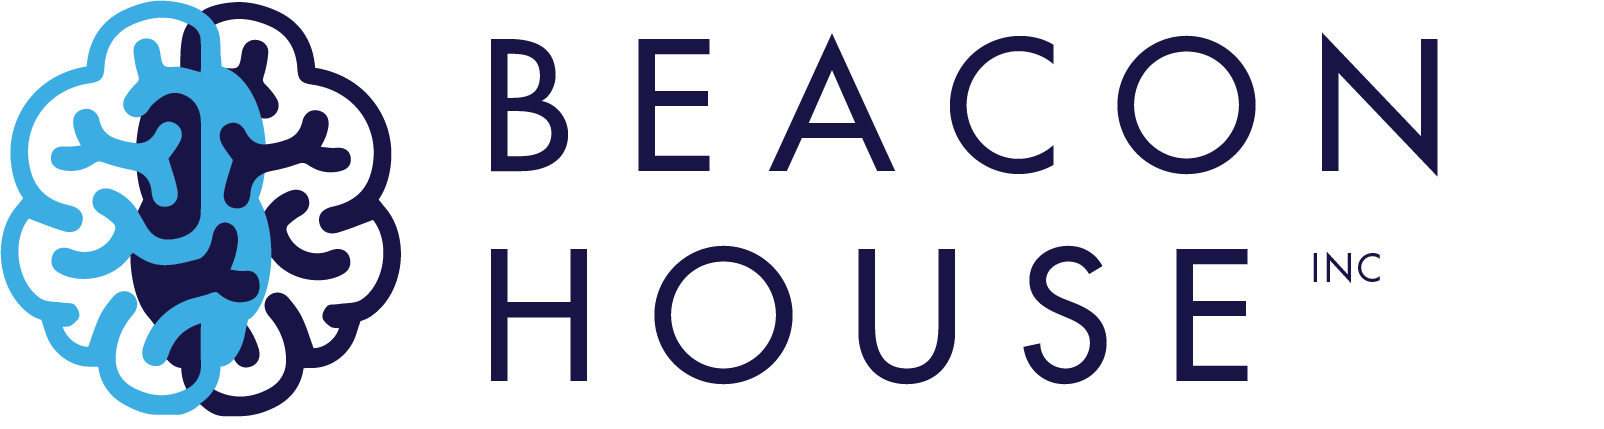 Beaconhouse Logo - The Beacon House | STEAM Education for Everyone